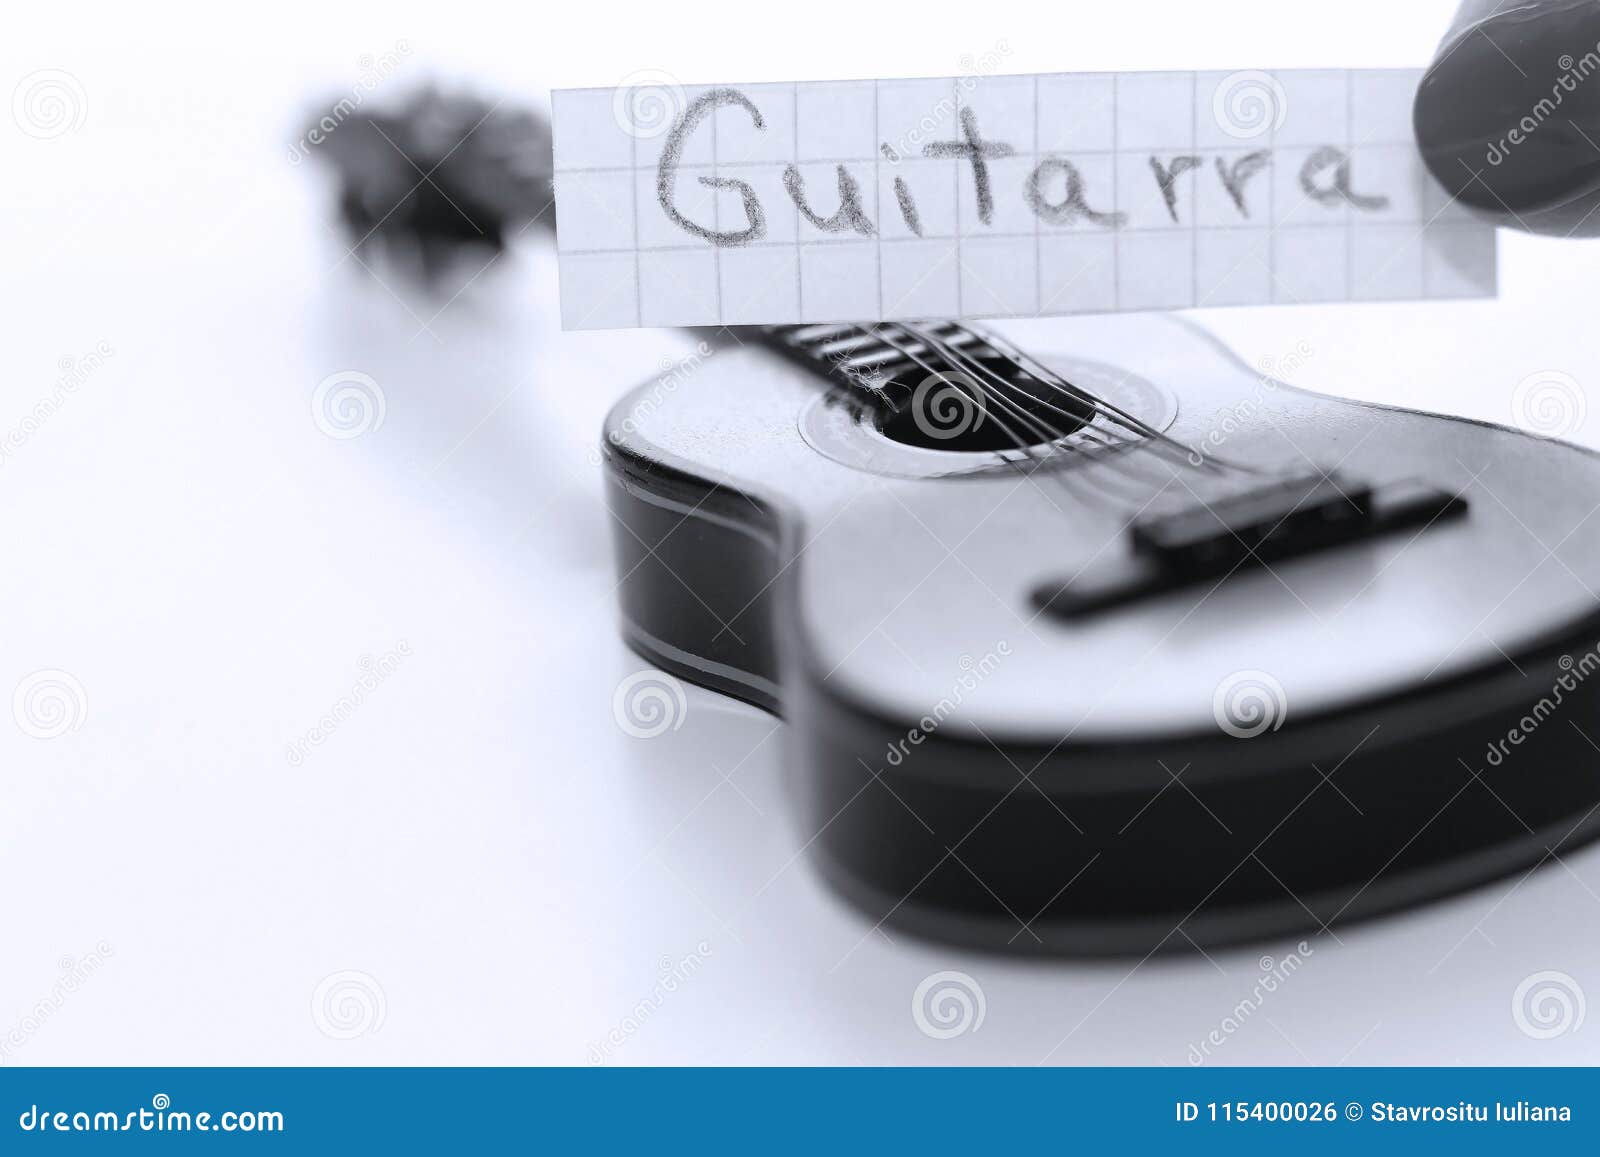 guitarra, portuguese word for guitar in english